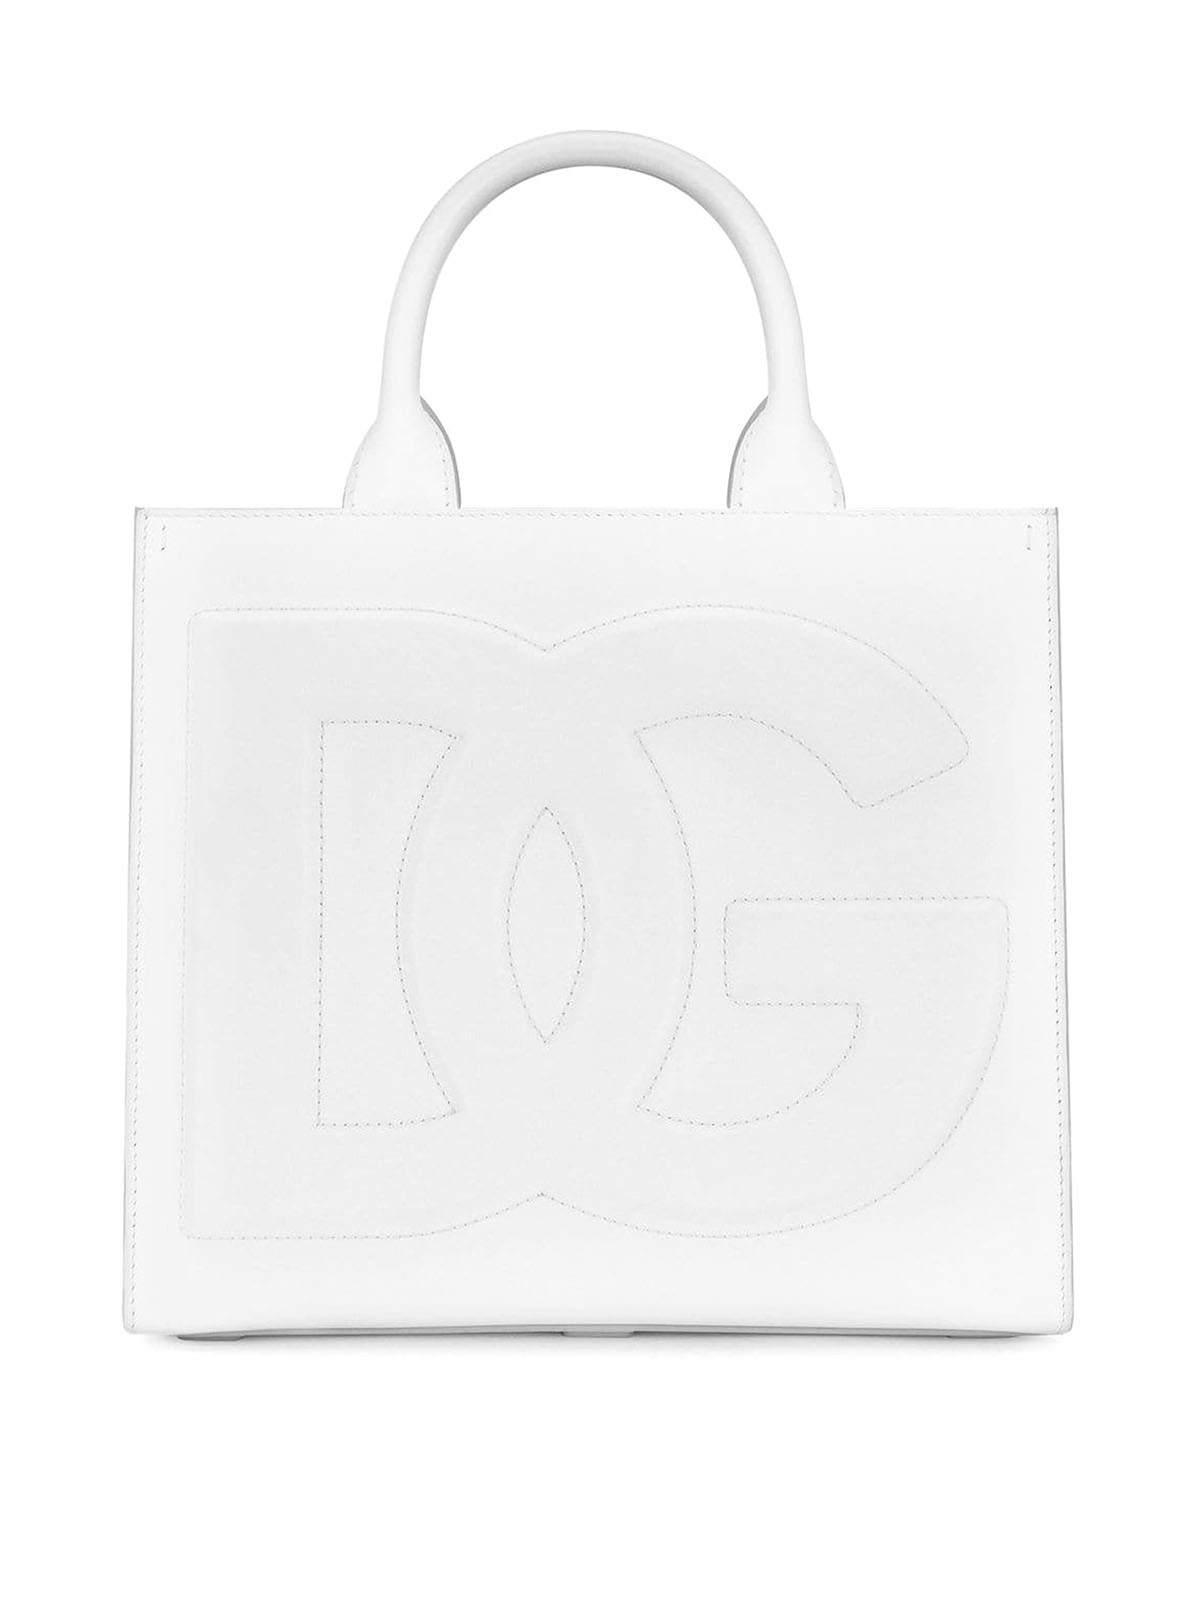 Dolce & Gabbana Leather Tote Bag In Blanco